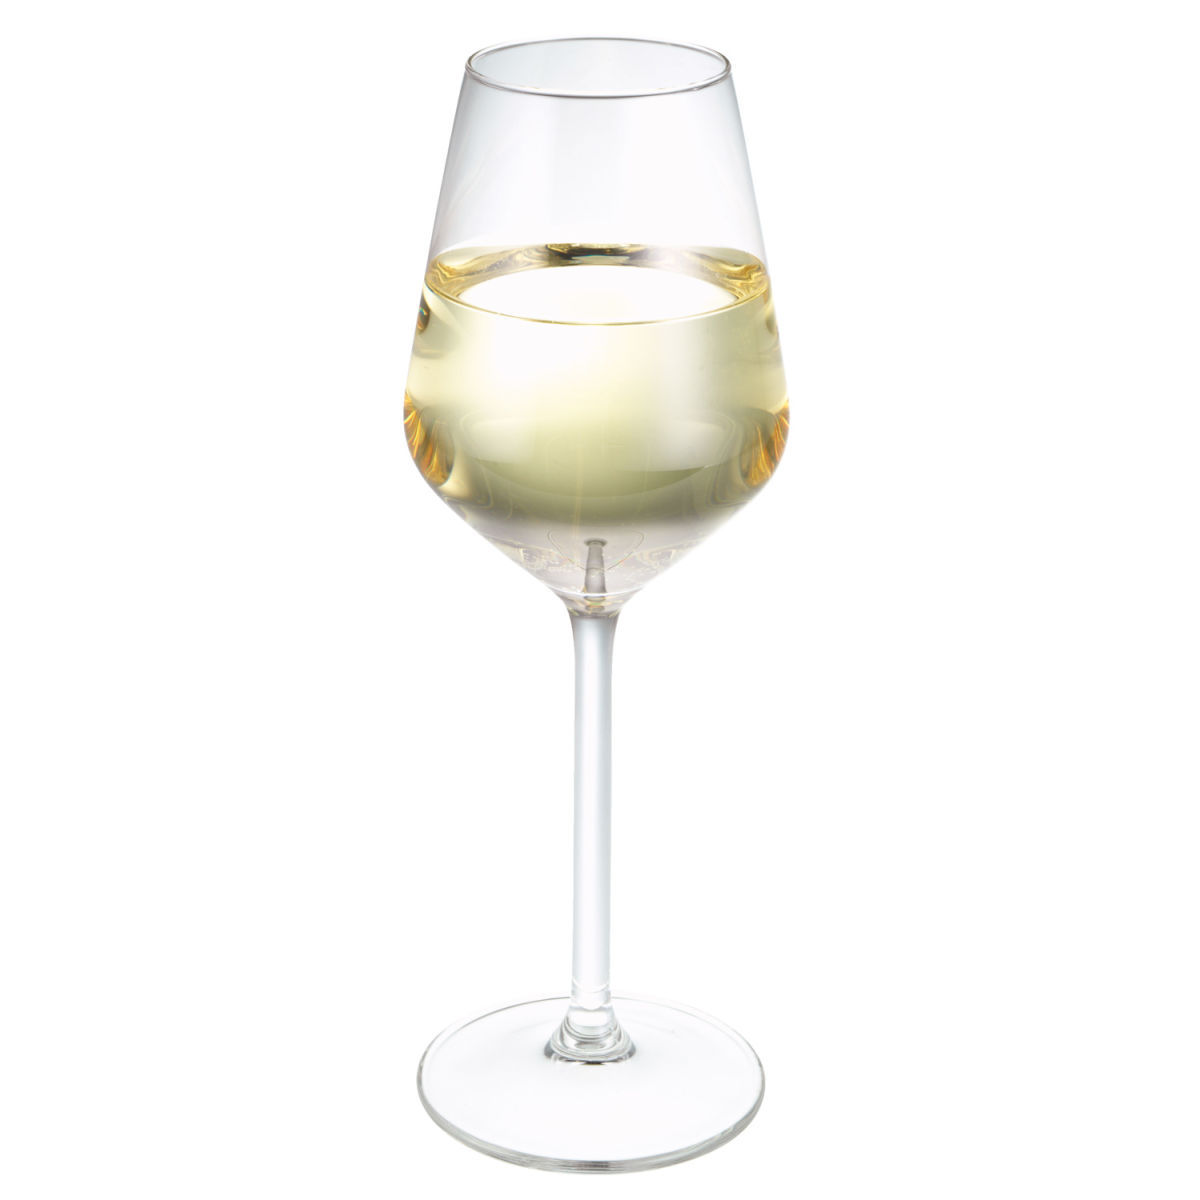 Royal leerdam Witte wijnglas Carré met vulstreepje; 380ml, 5.8x21.7 cm (ØxH); transparant; 0.1 l & 0.2 l vulstreepje, 6 stuk / verpakking